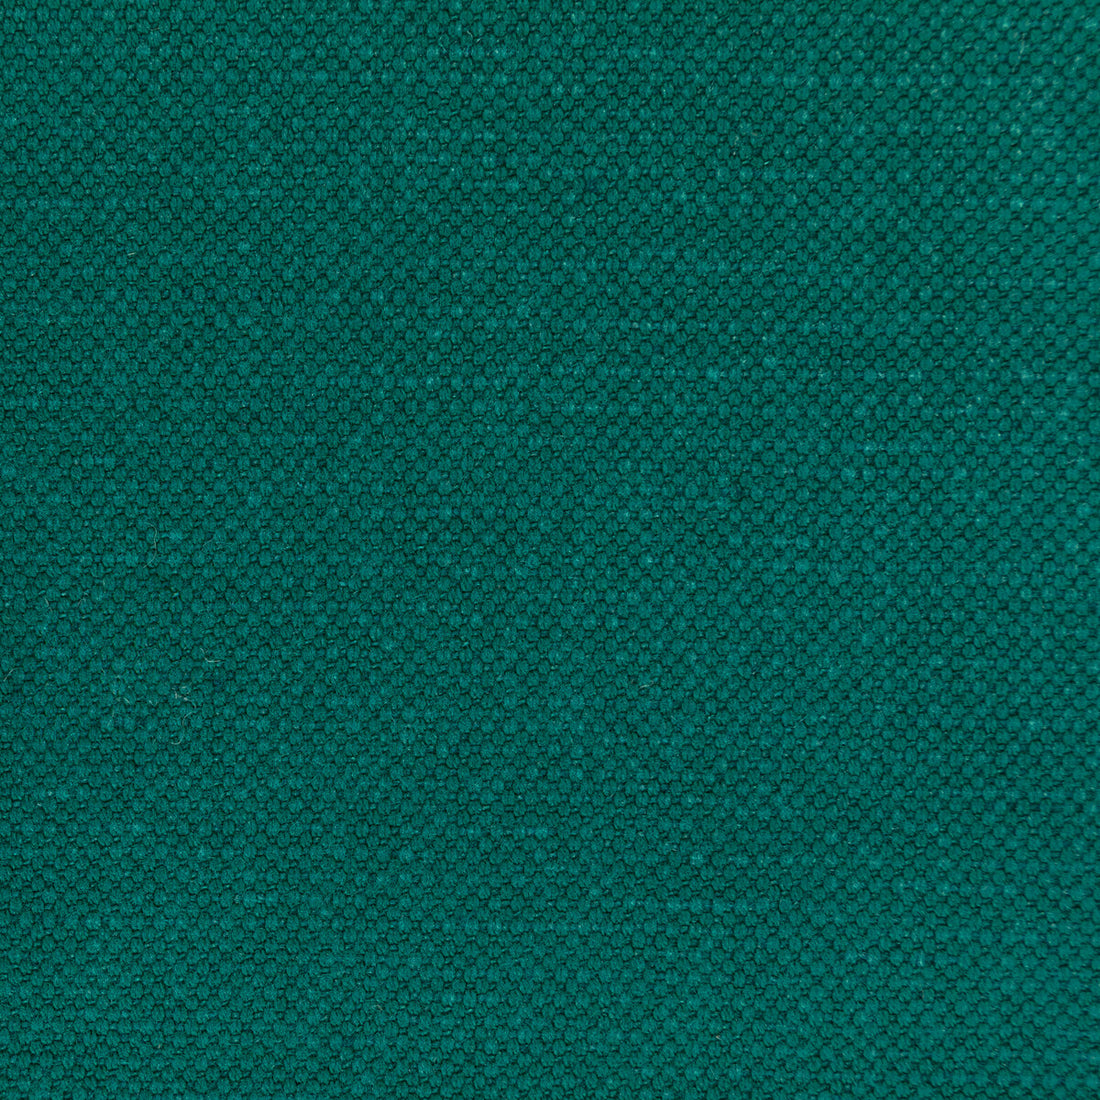 Carson fabric in verde color - pattern 36282.335.0 - by Kravet Basics